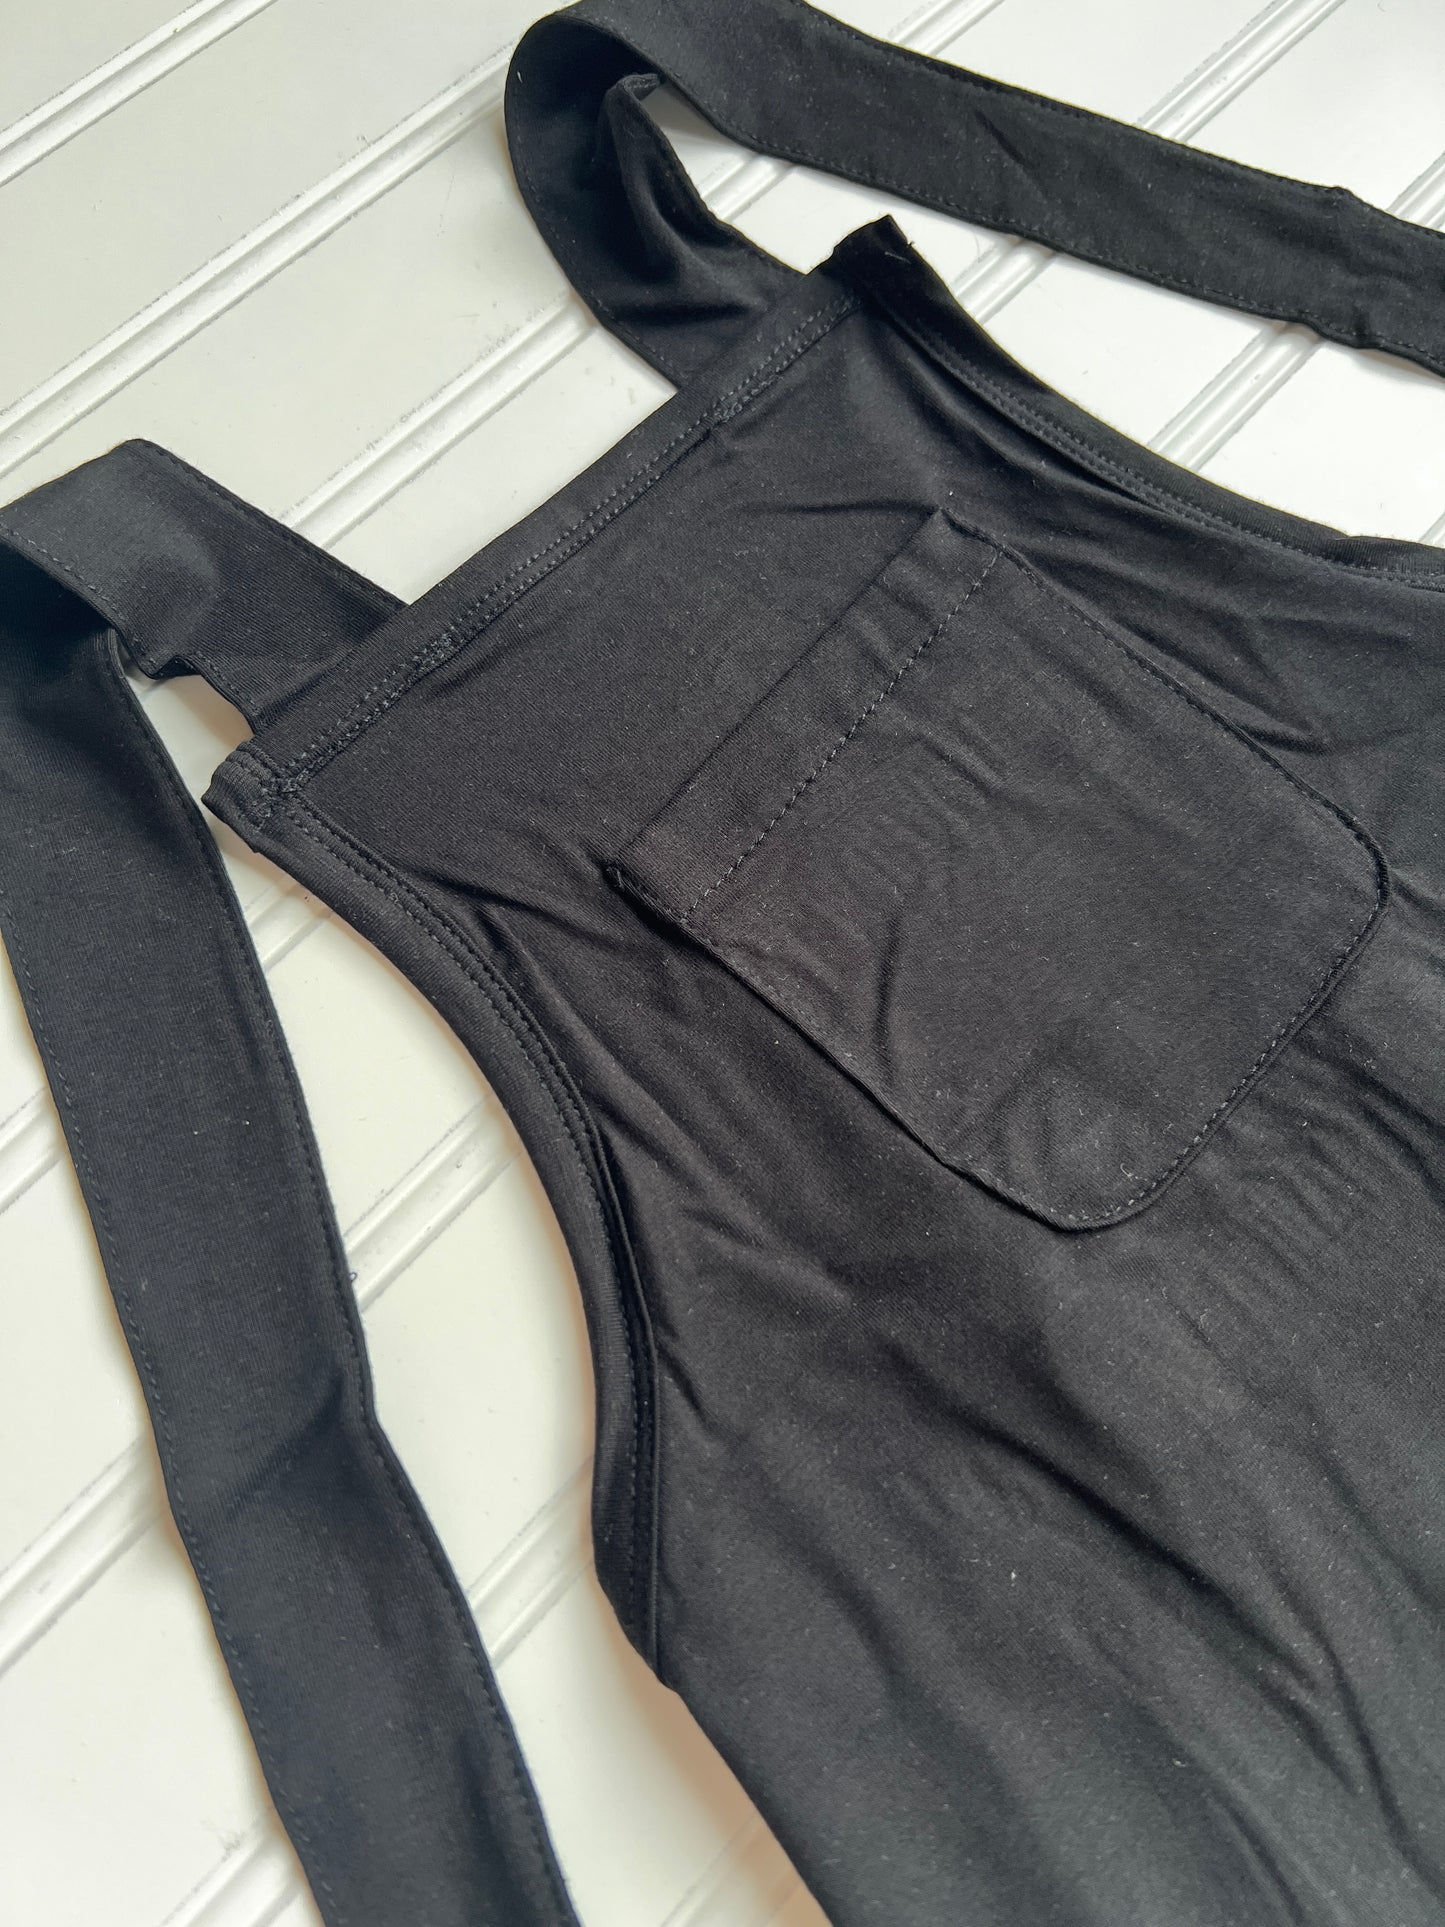 Black overalls